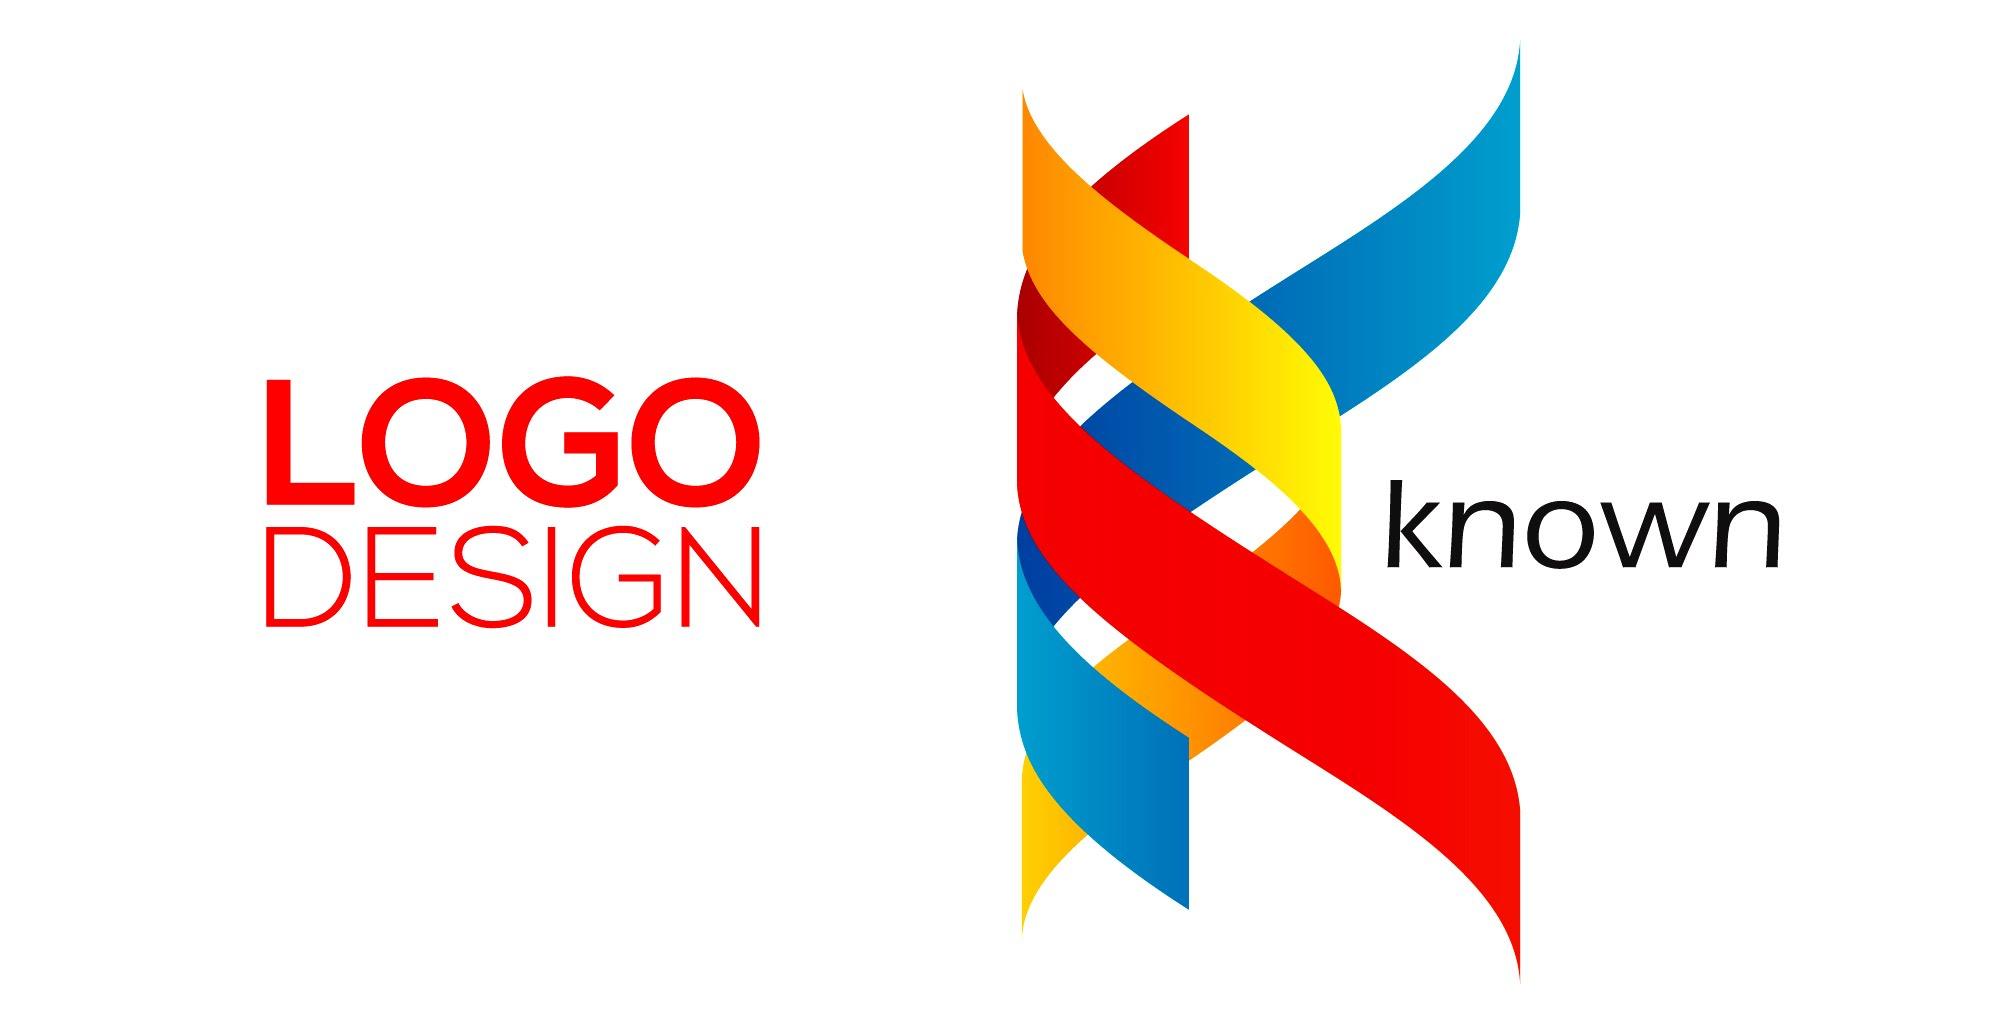 Generic Sample Logo - Digital marketing agency Hong Kong. Graphic Design Services